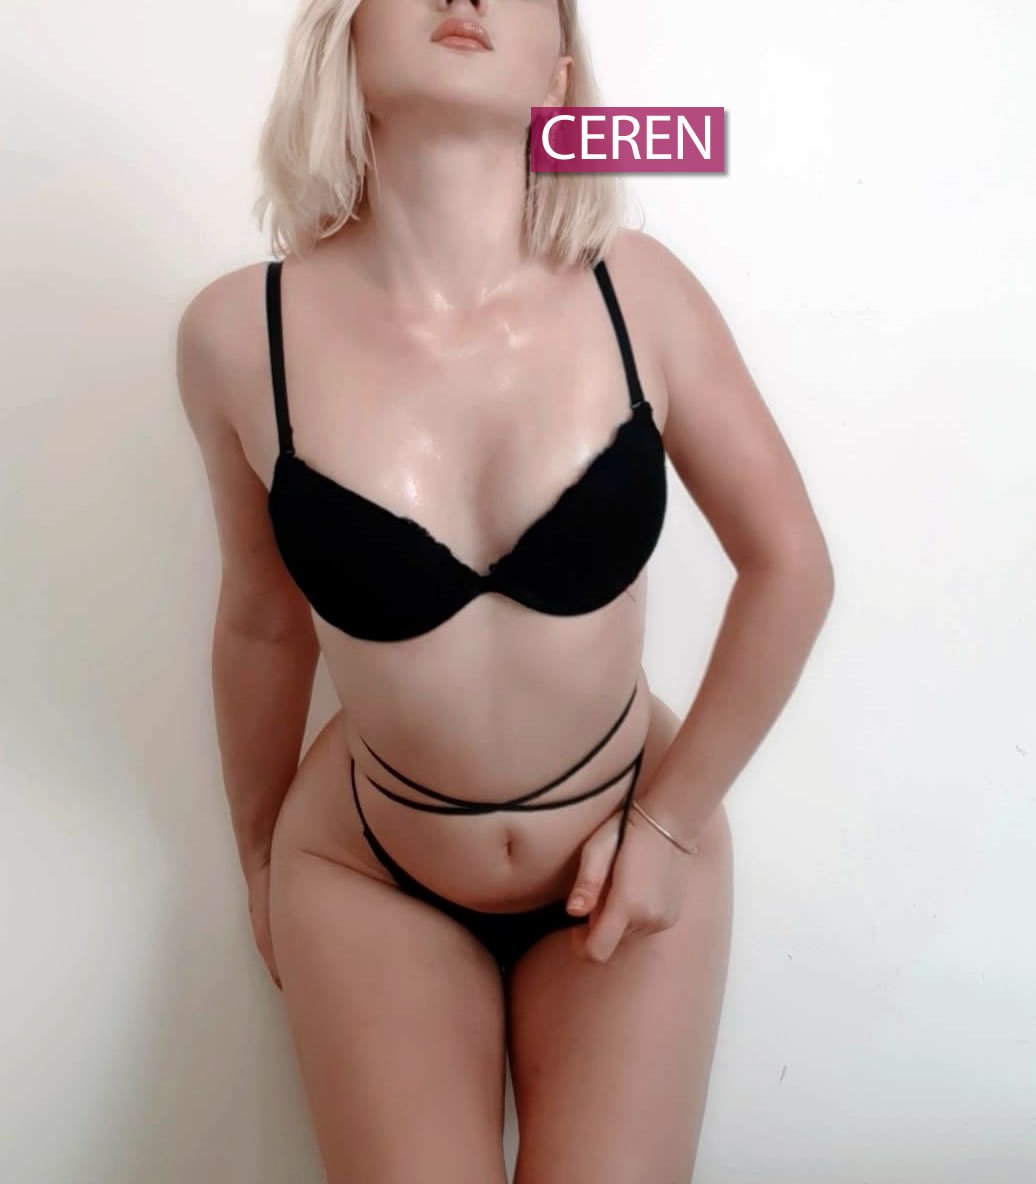 Ceren Turkish Girl, Turkish escort in İstanbul hq nude picture